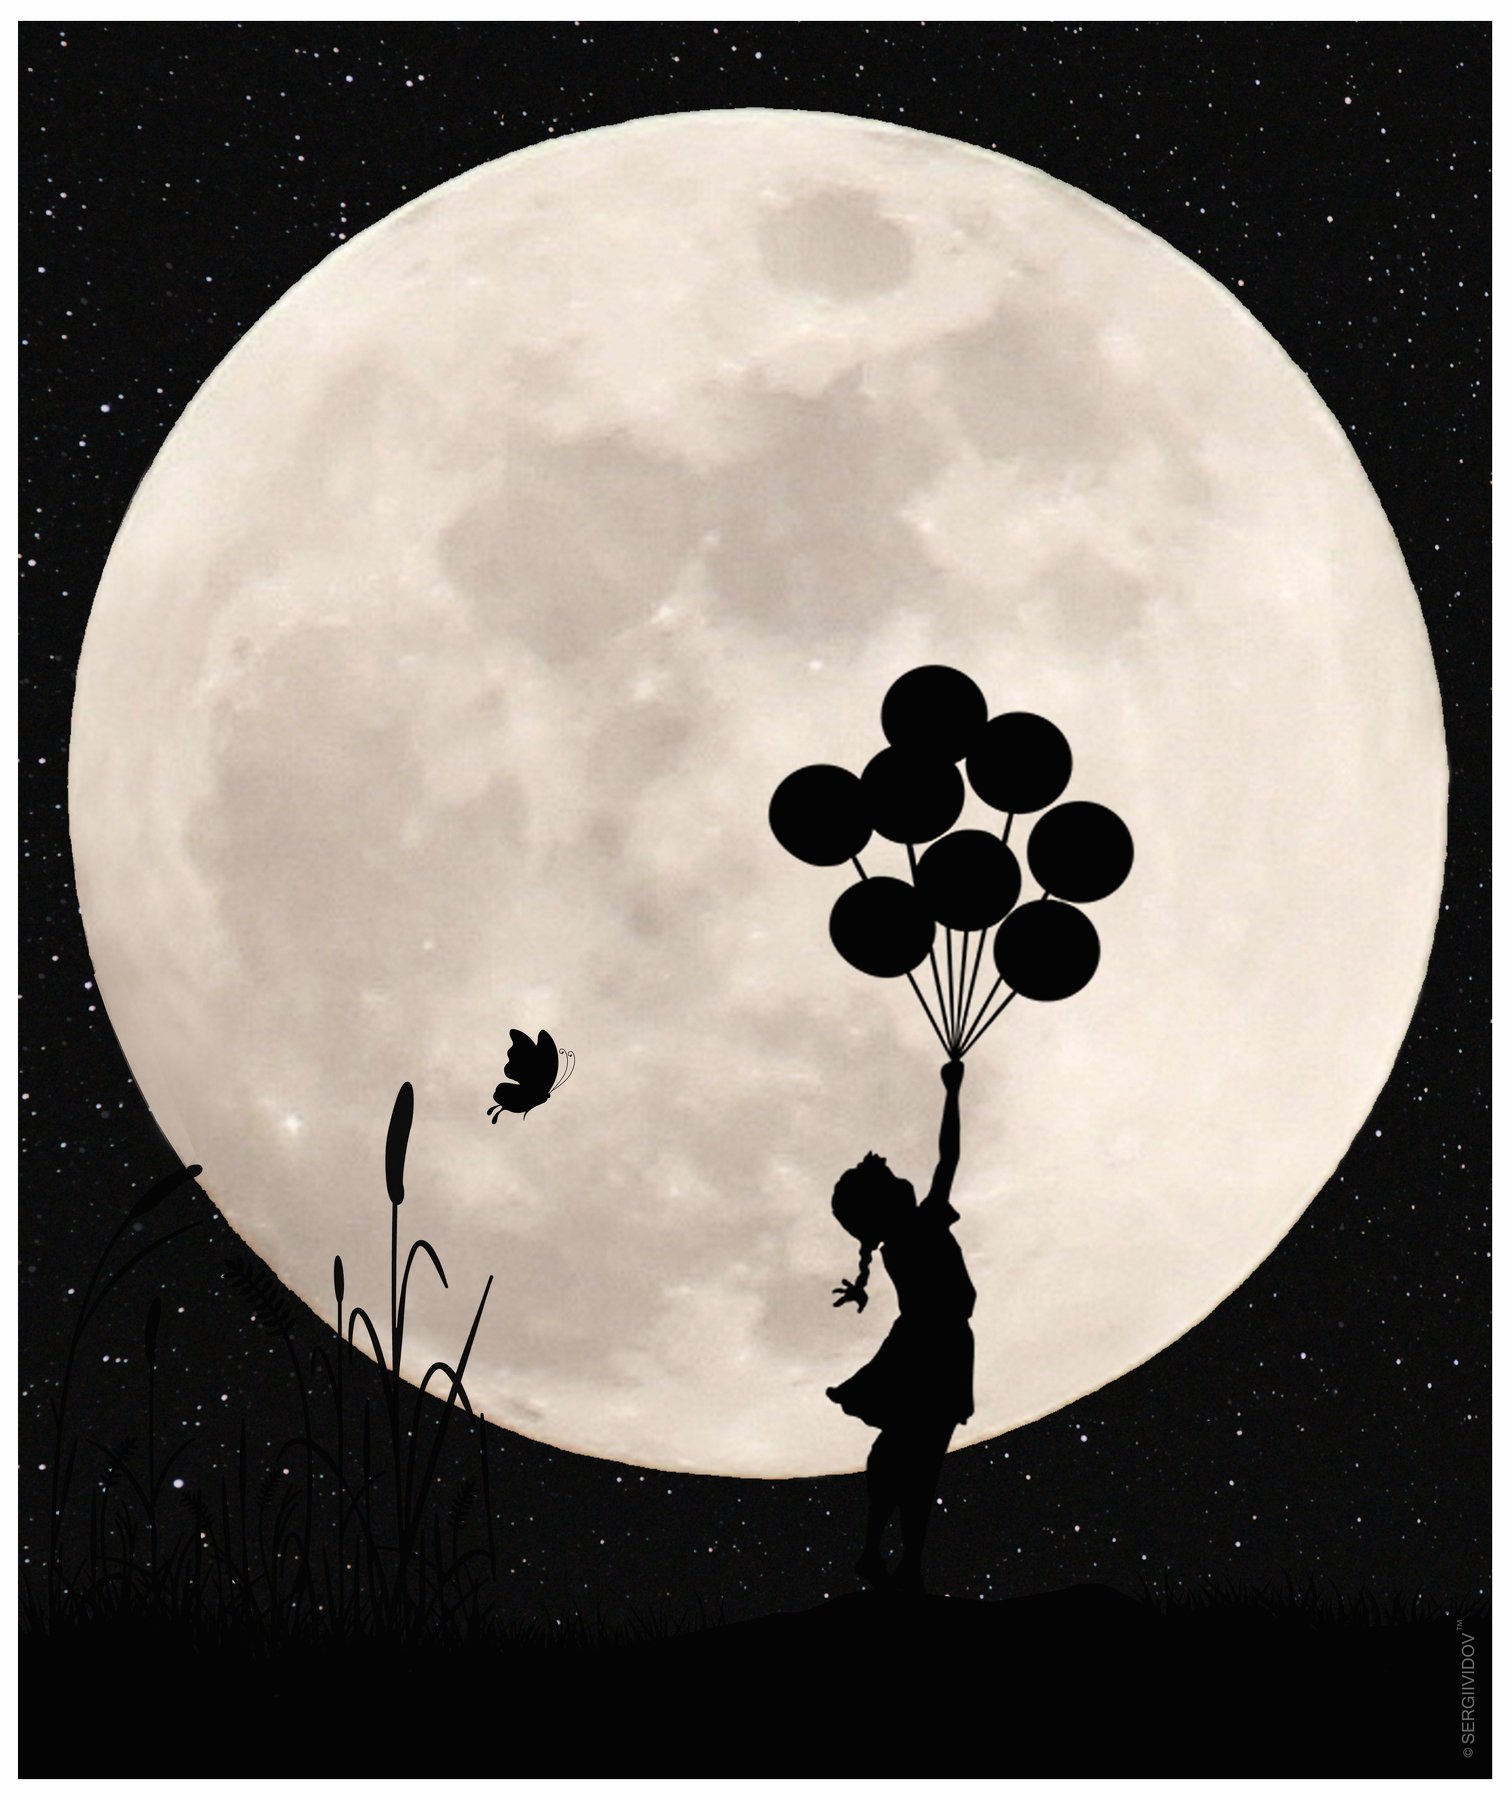 луна, воздушные шары, небо, ночь, ребенок, Sergii Vidov